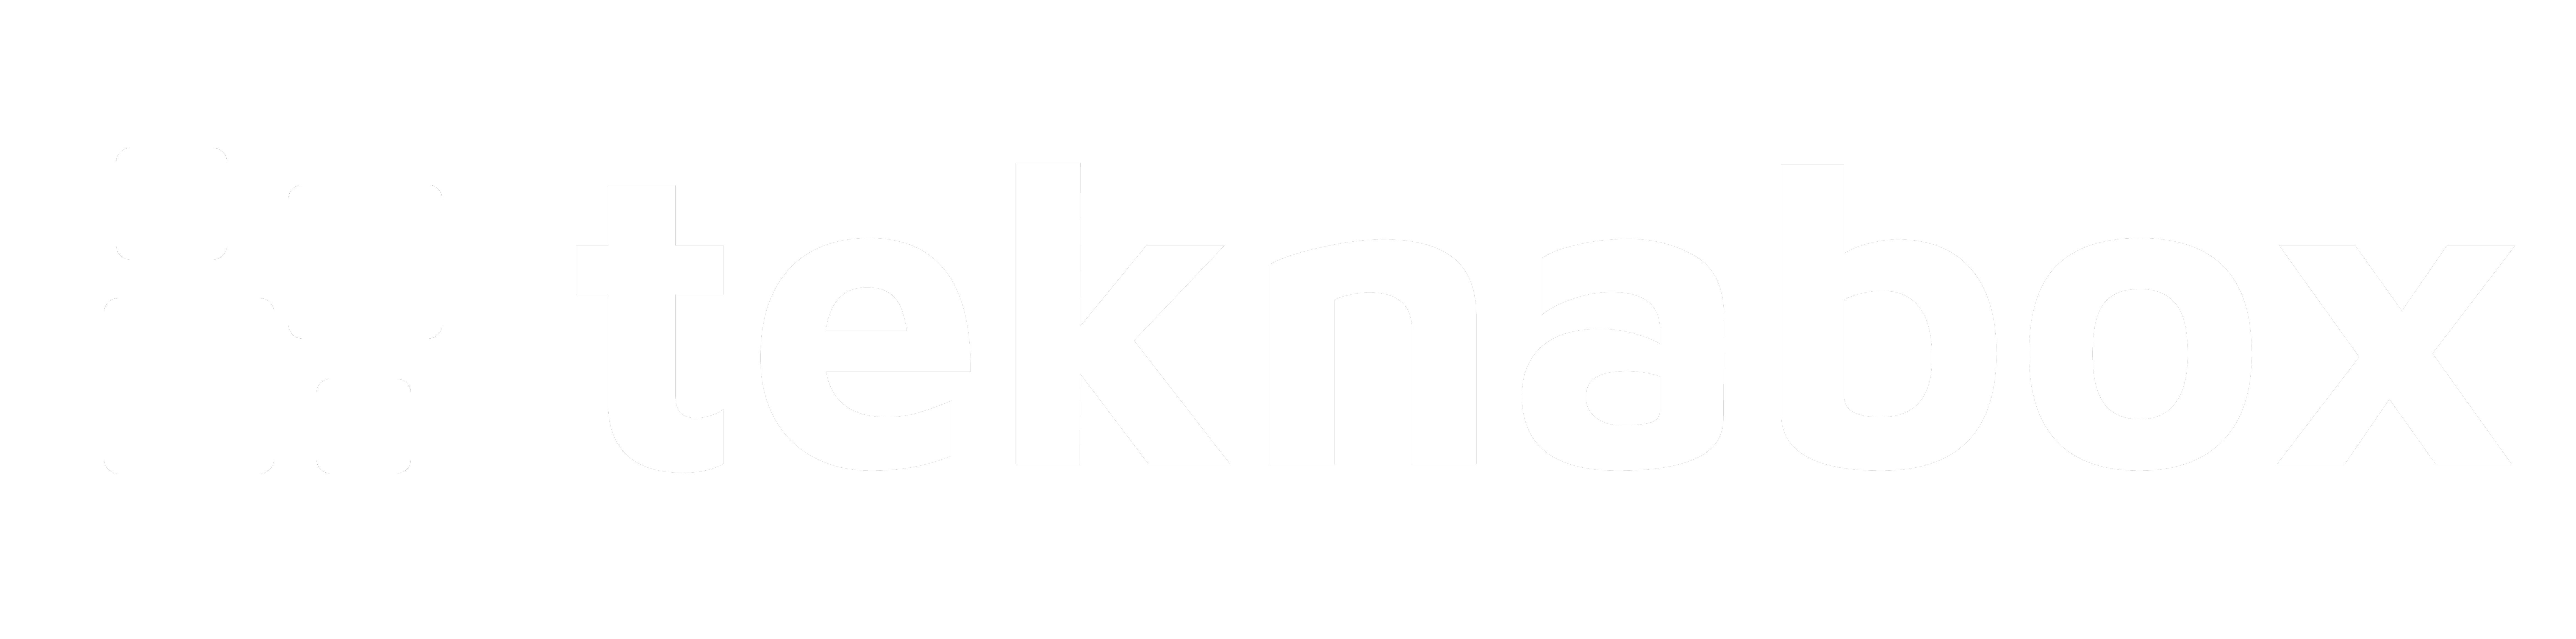 logotipo-teknabox-2021-branco